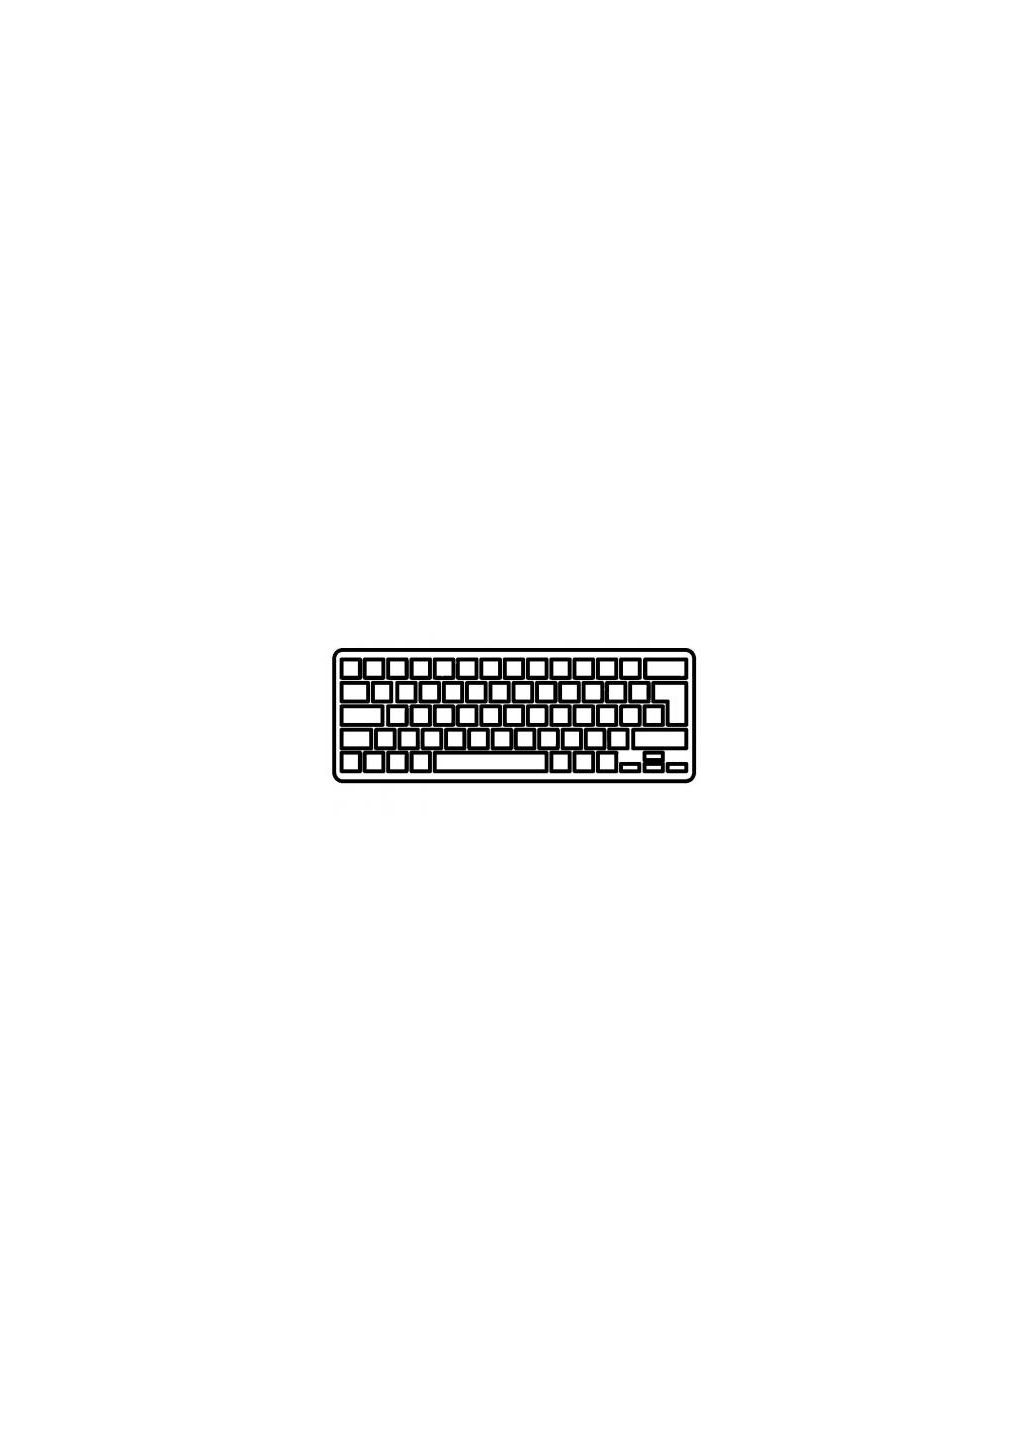 Клавиатура ноутбука Pavilion dv43000 черная с подсветкой UA (A43733) HP pavilion dv4-3000 черная с черной рамкой подсветко (276707691)